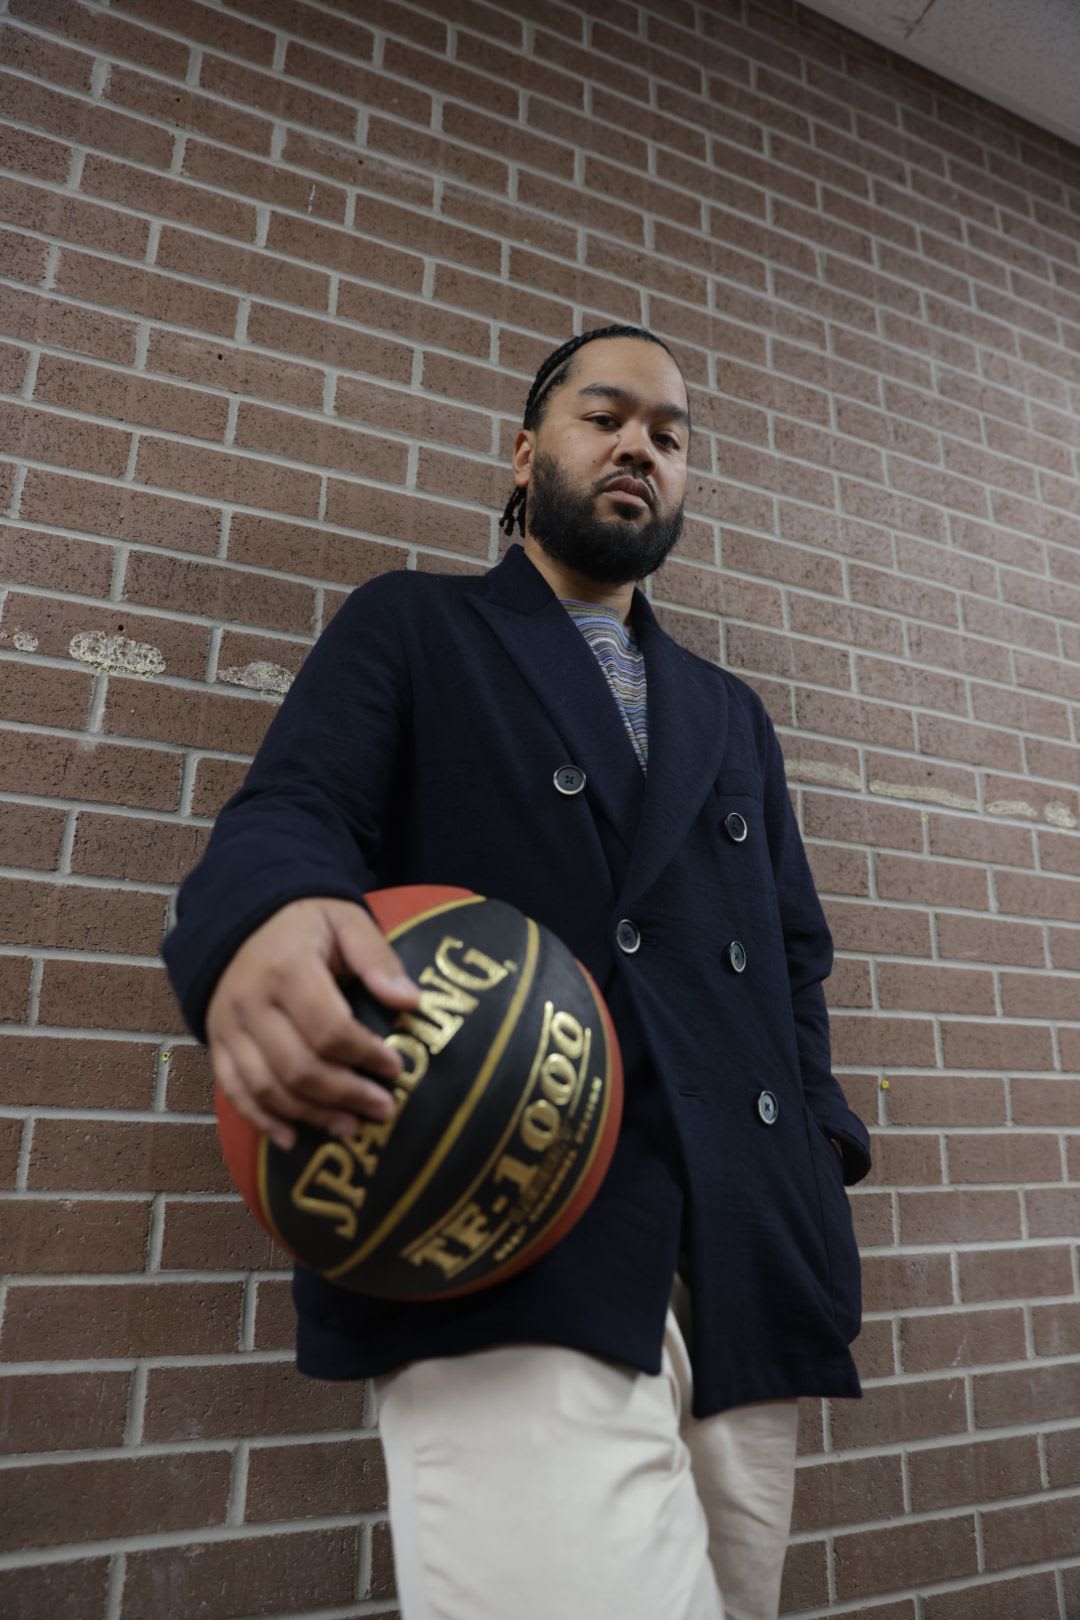 Drake affiliate OVO Niko poses with a basketball